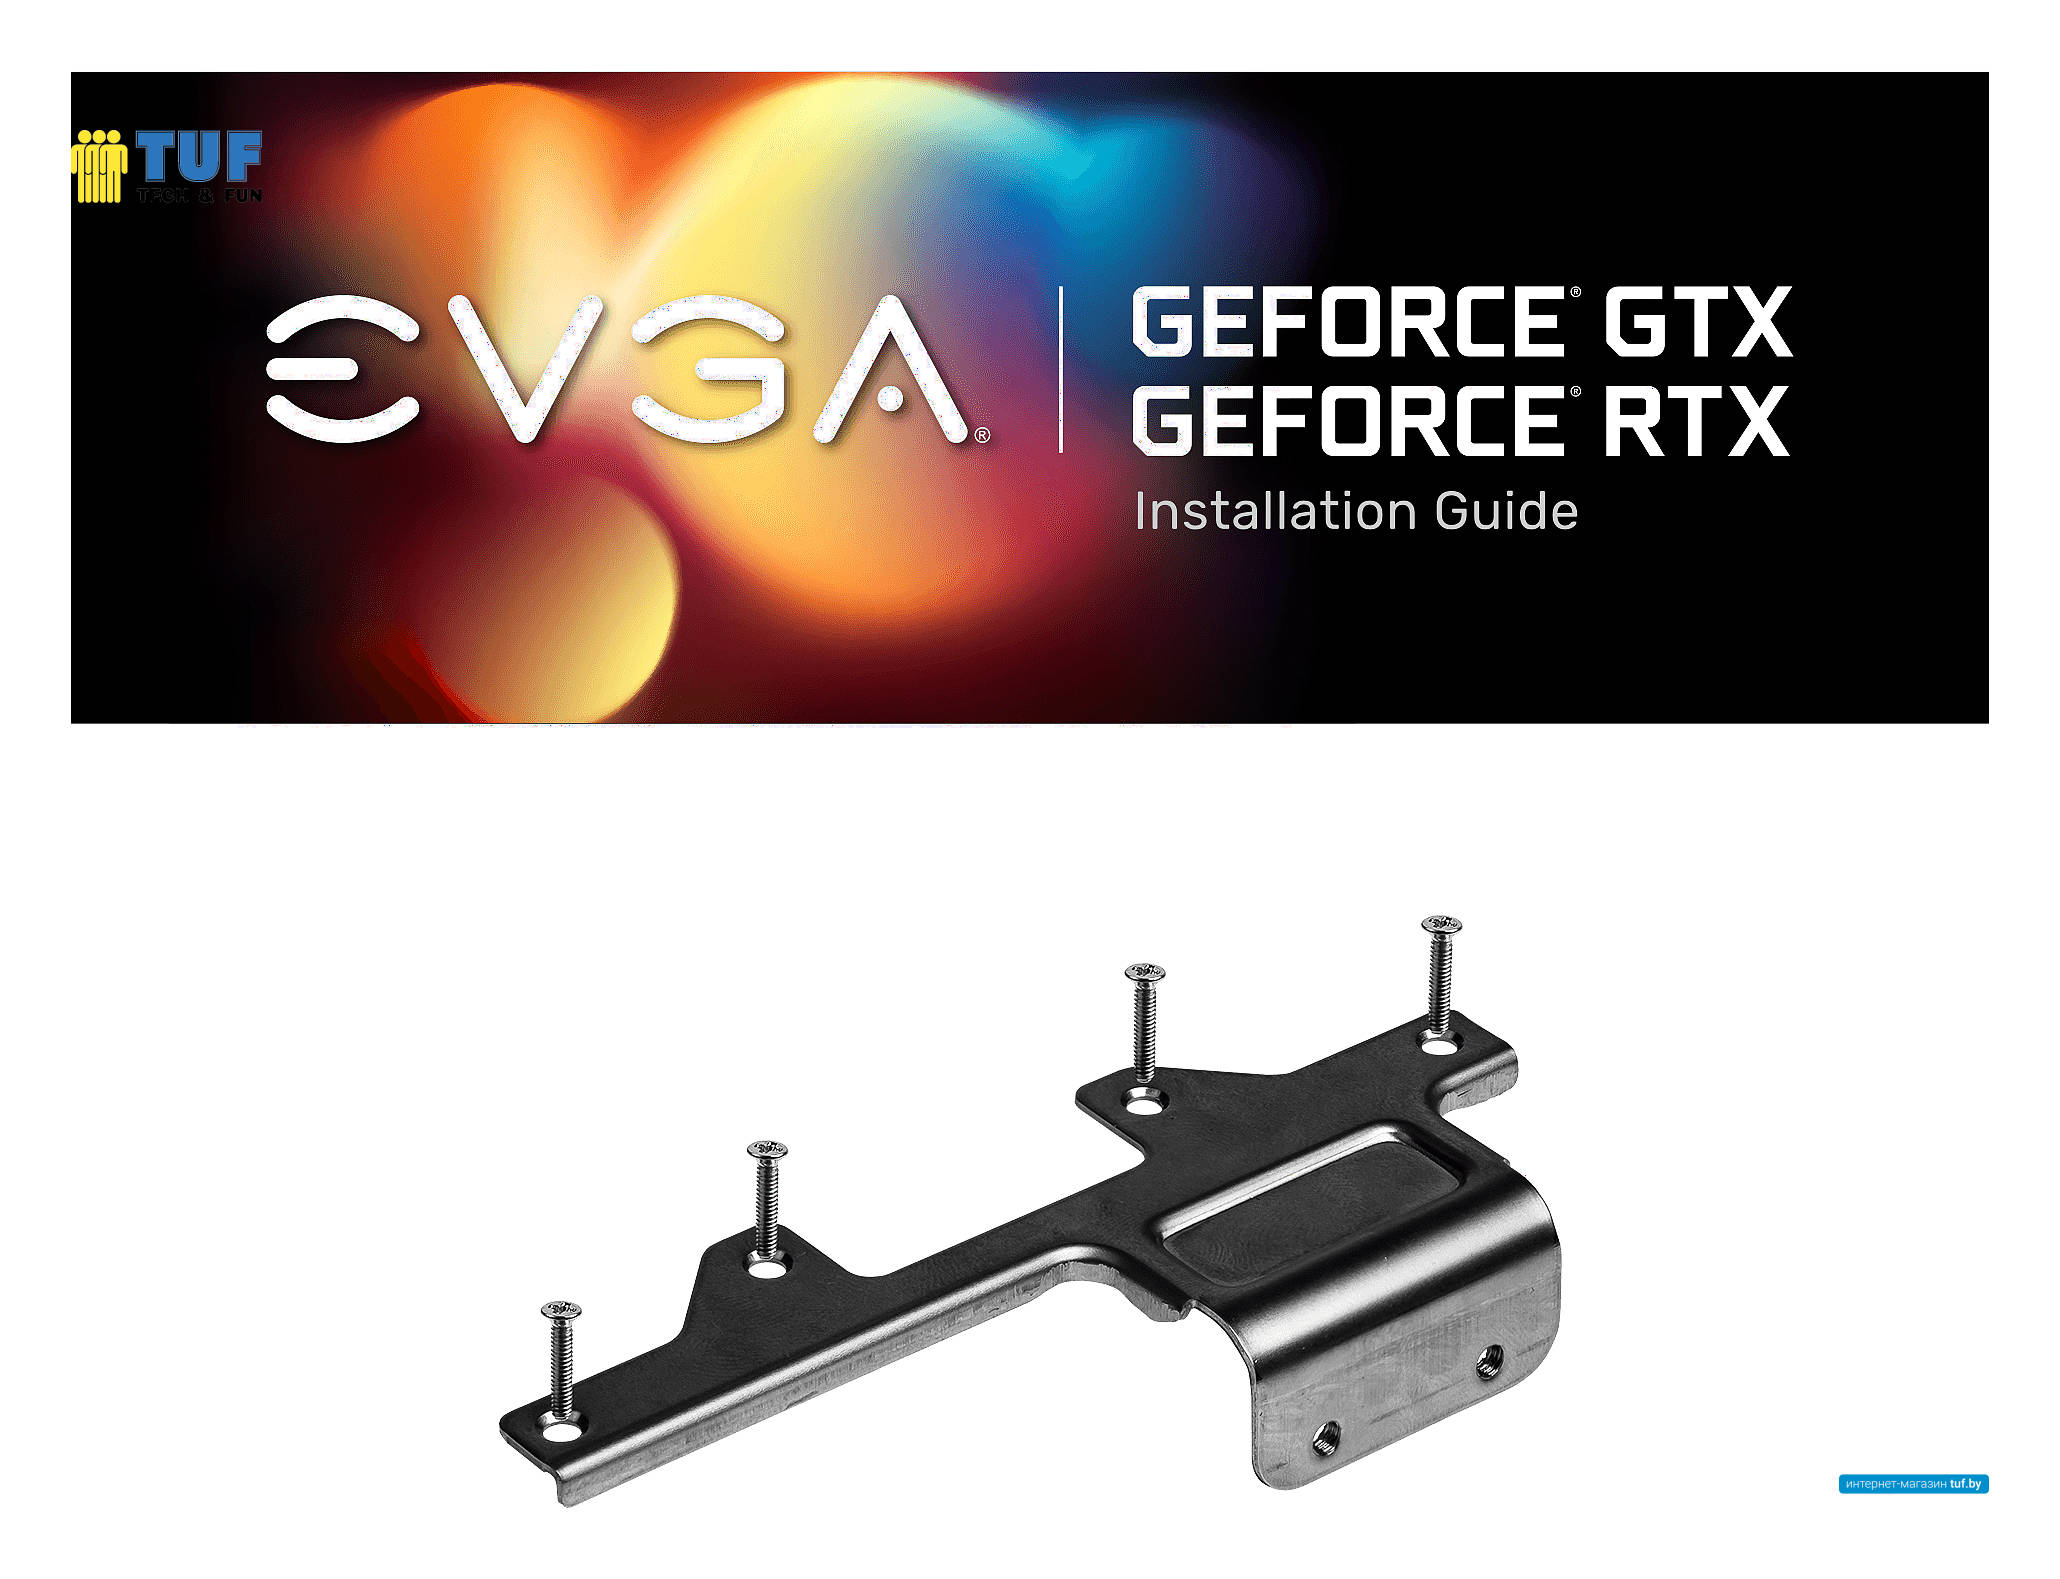 Видеокарта EVGA GeForce RTX 3080 XC3 Ultra Gaming 10GB GDDR6X 10G-P5-3885-KL